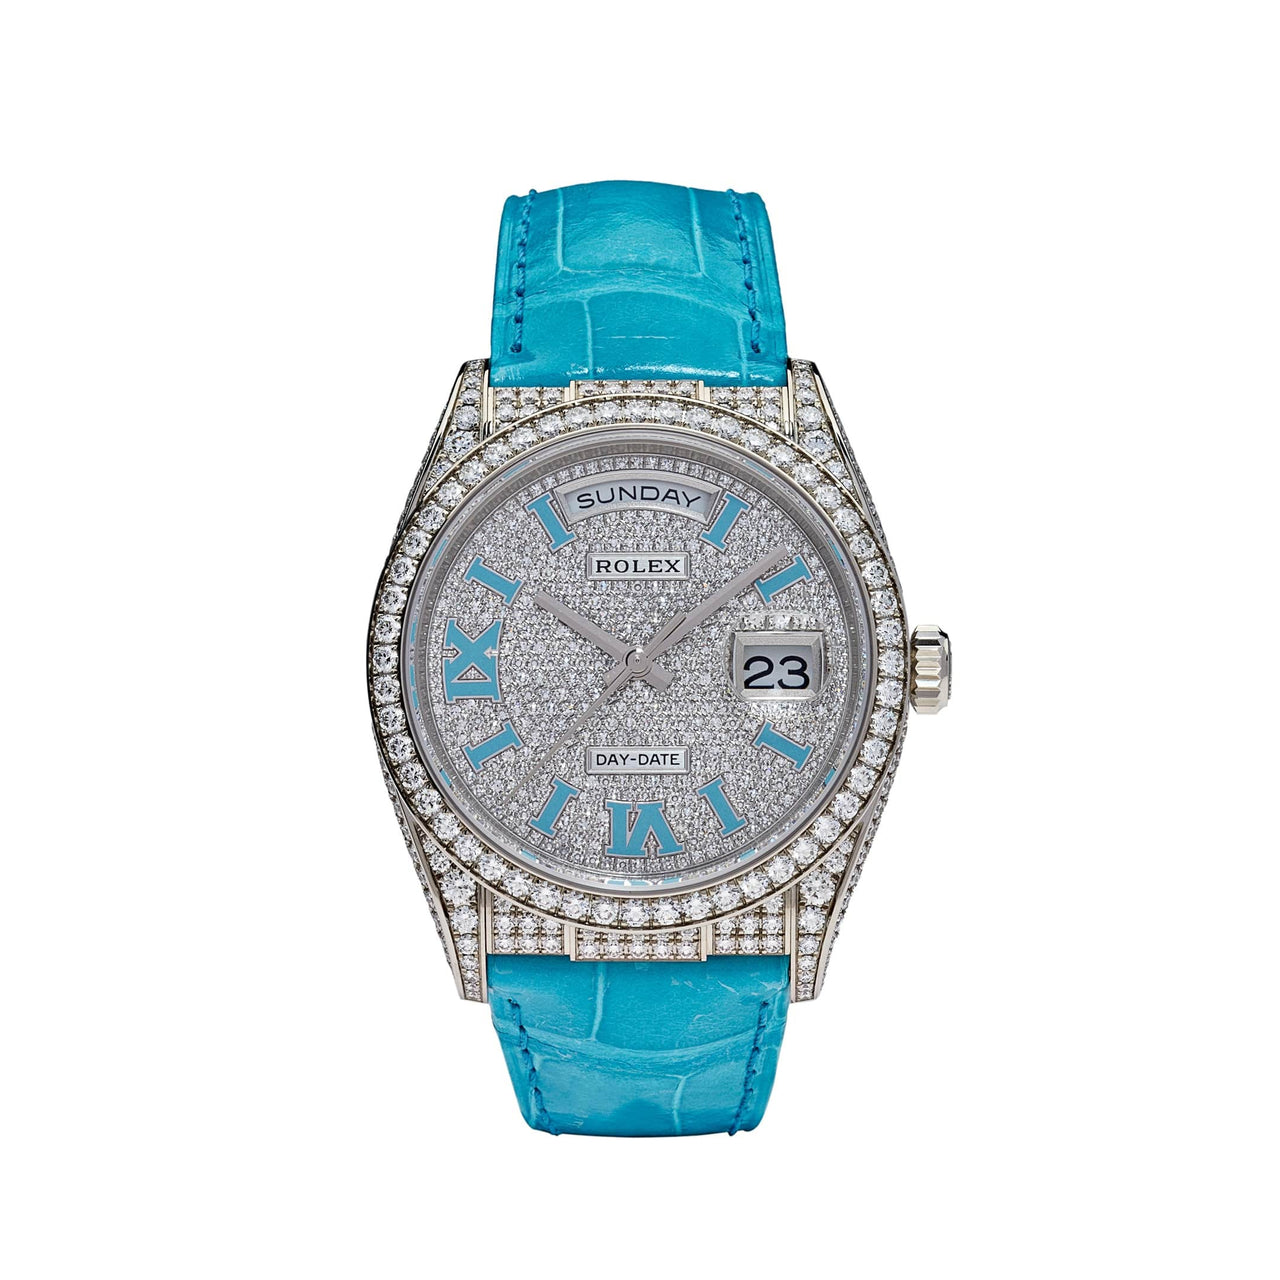 Luxury Watch Rolex Day-Date 36mm White Gold Diamond Pave Roman Numeral Dial 128159RBR Wrist Aficionado